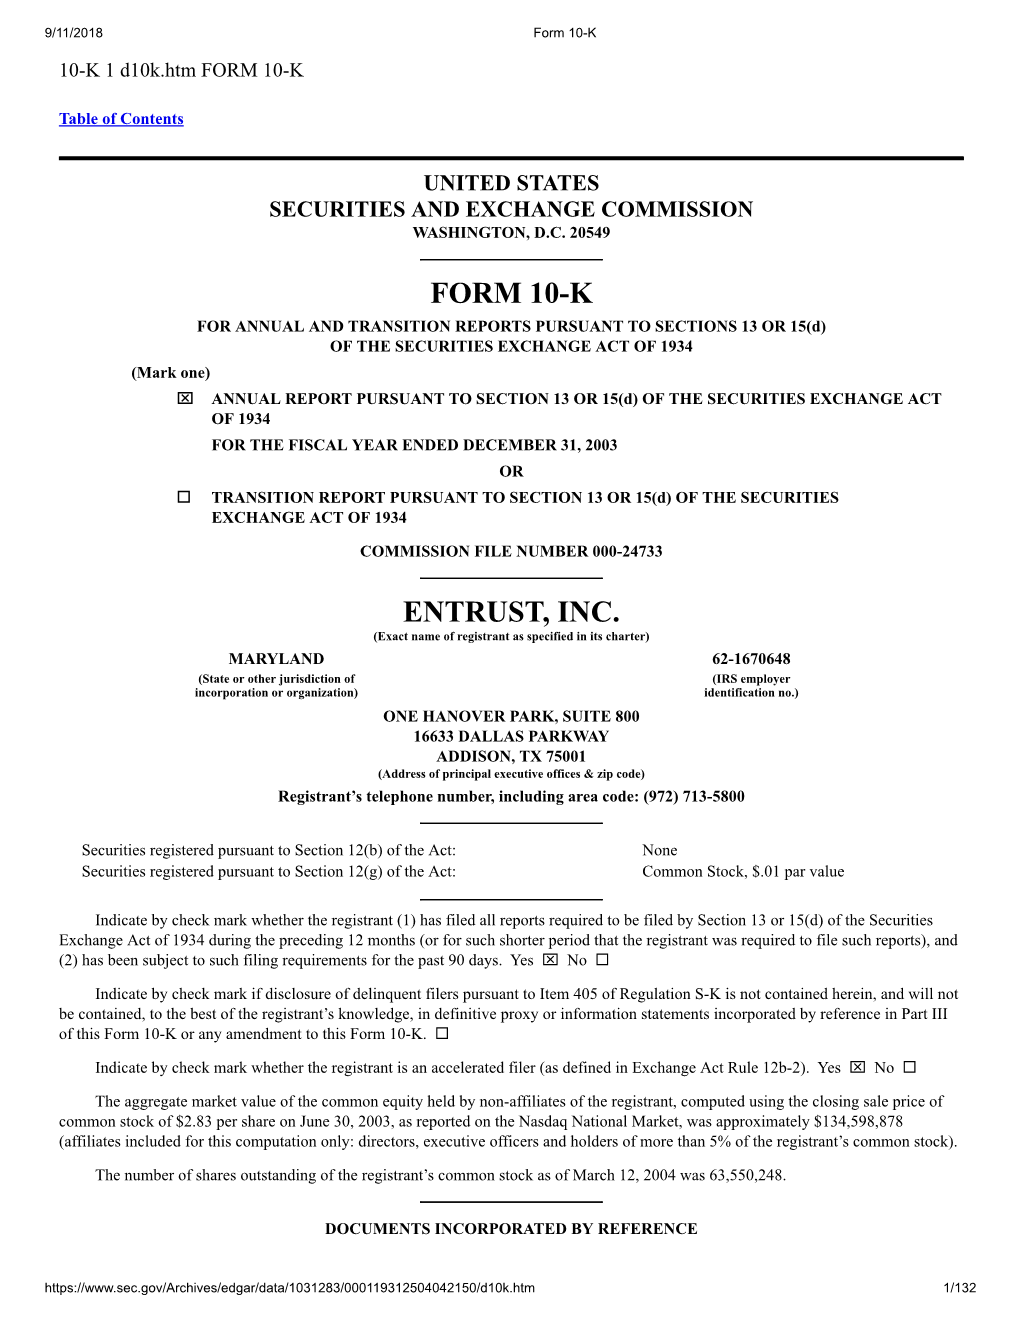 Form 10-K Entrust, Inc